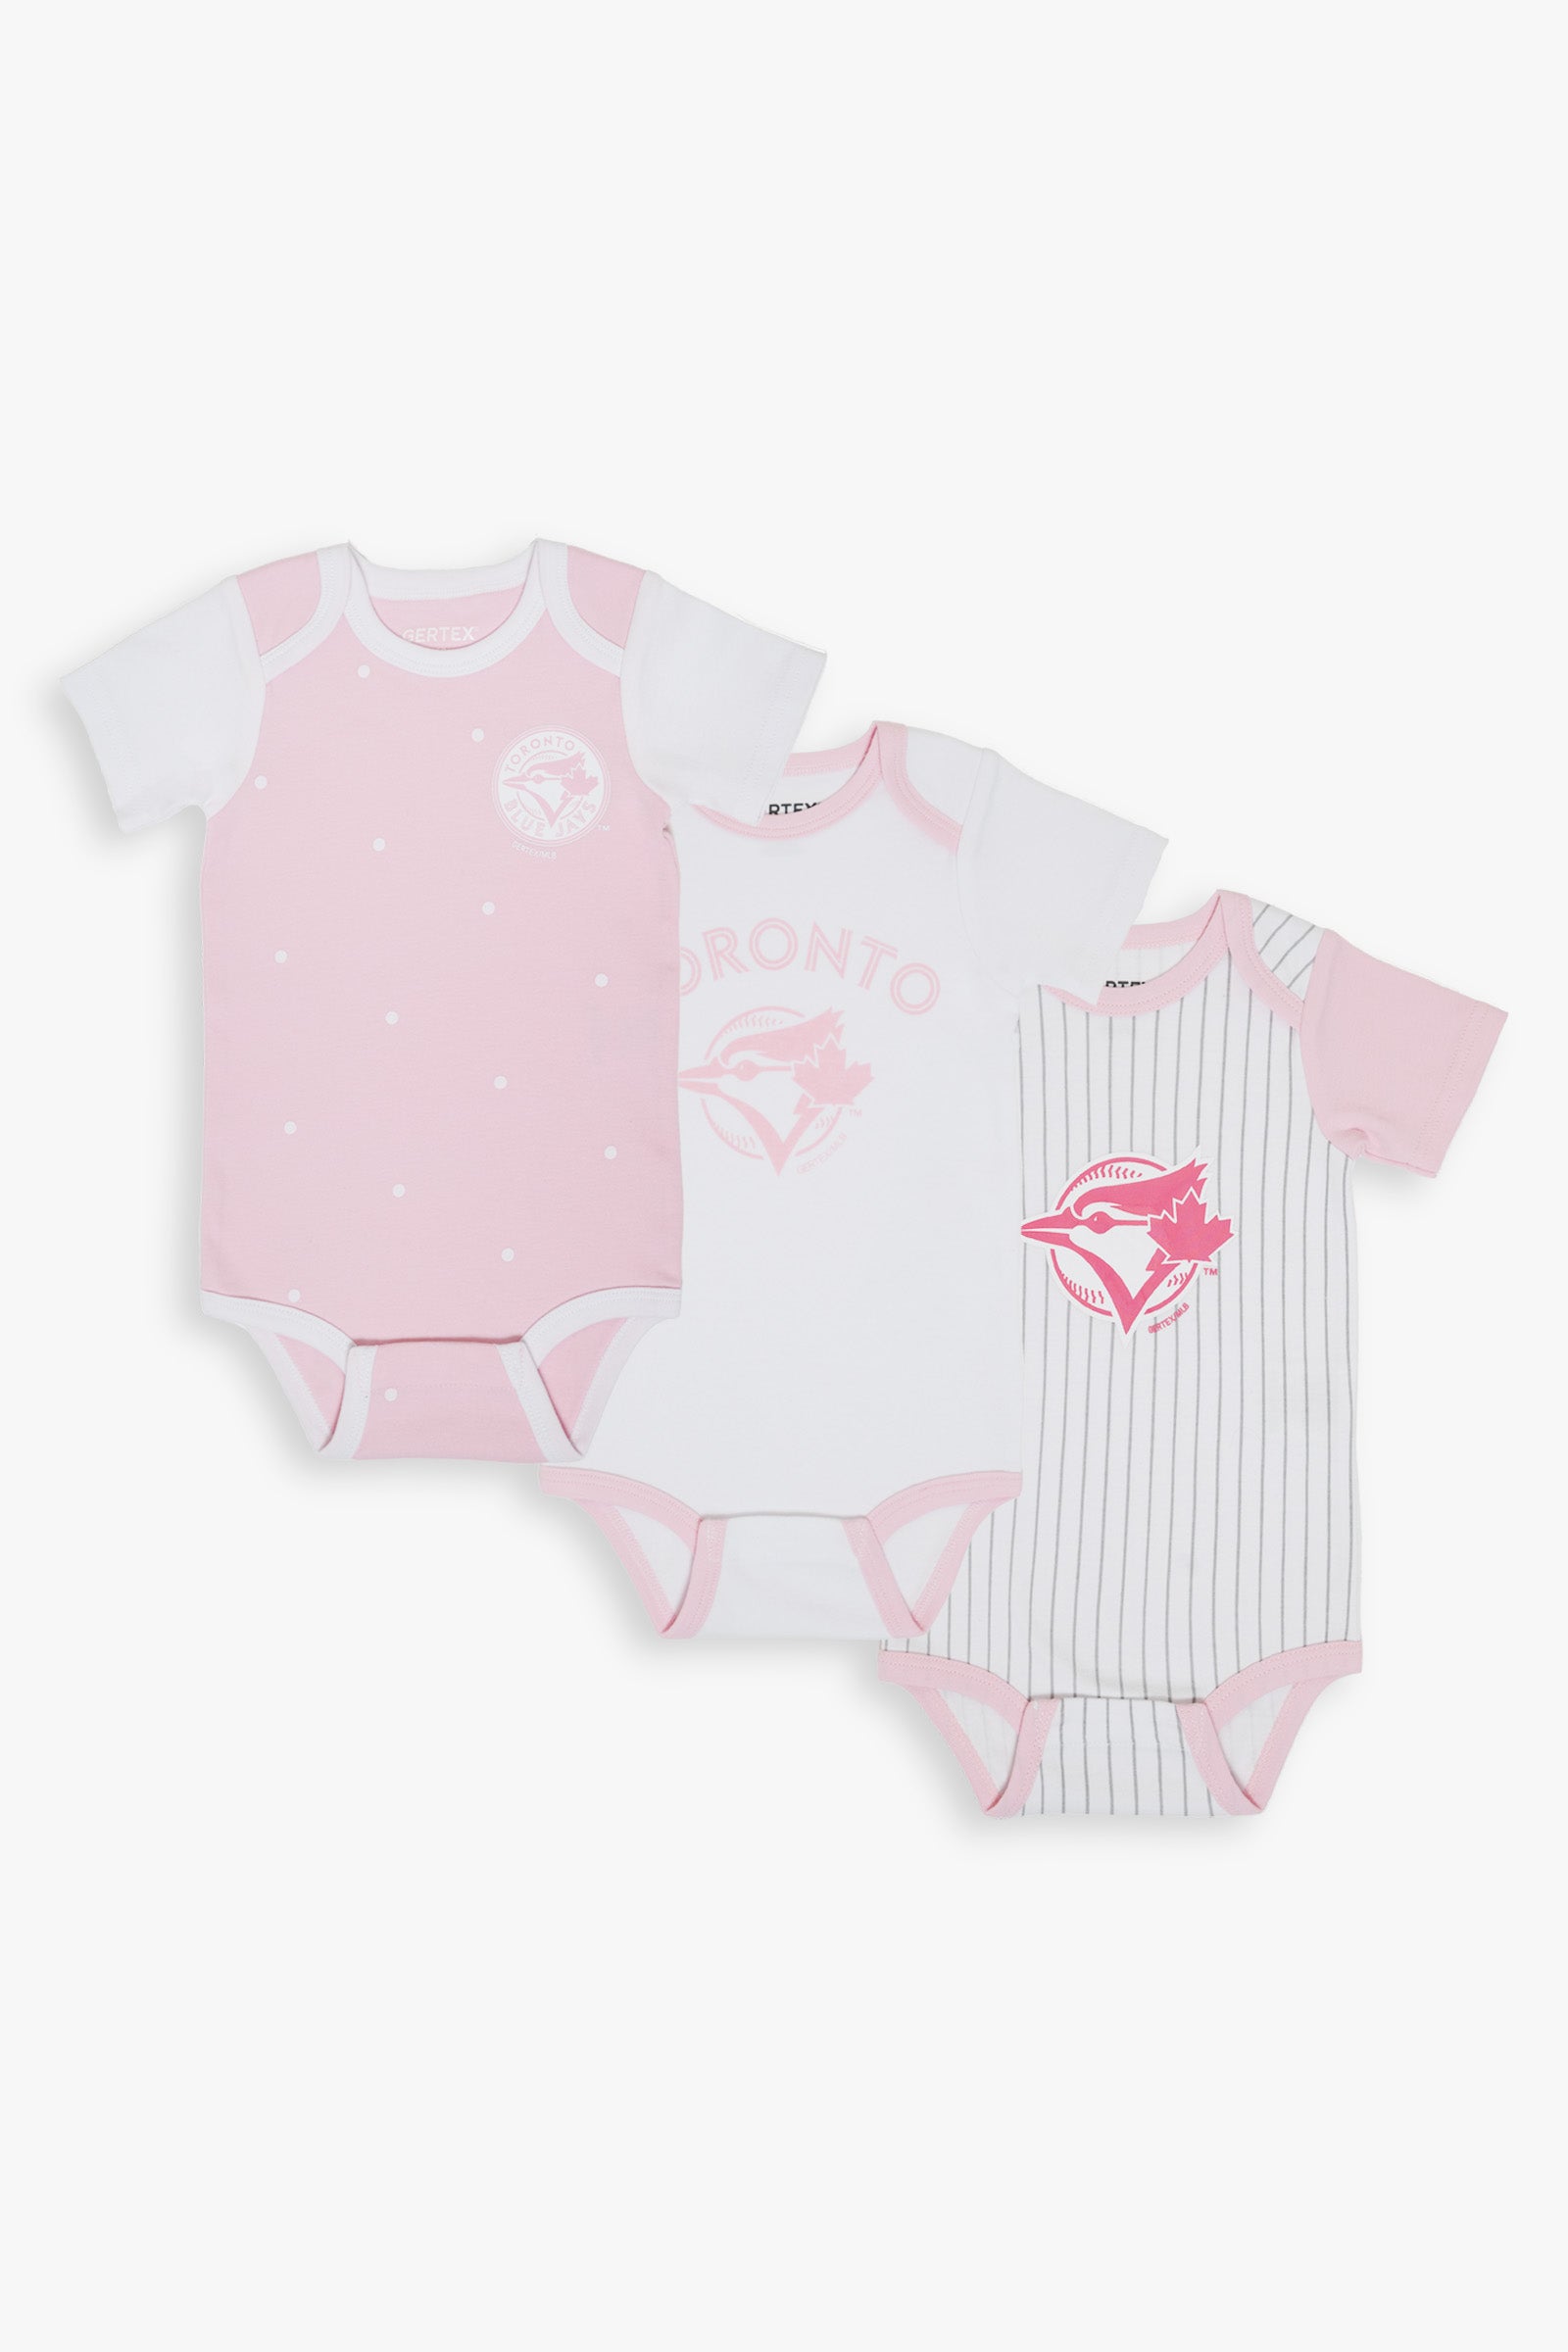 Baby Fanatic 2 Piece Bid and Shoes - MLB Toronto Blue Jays - White Unisex  Infant Apparel